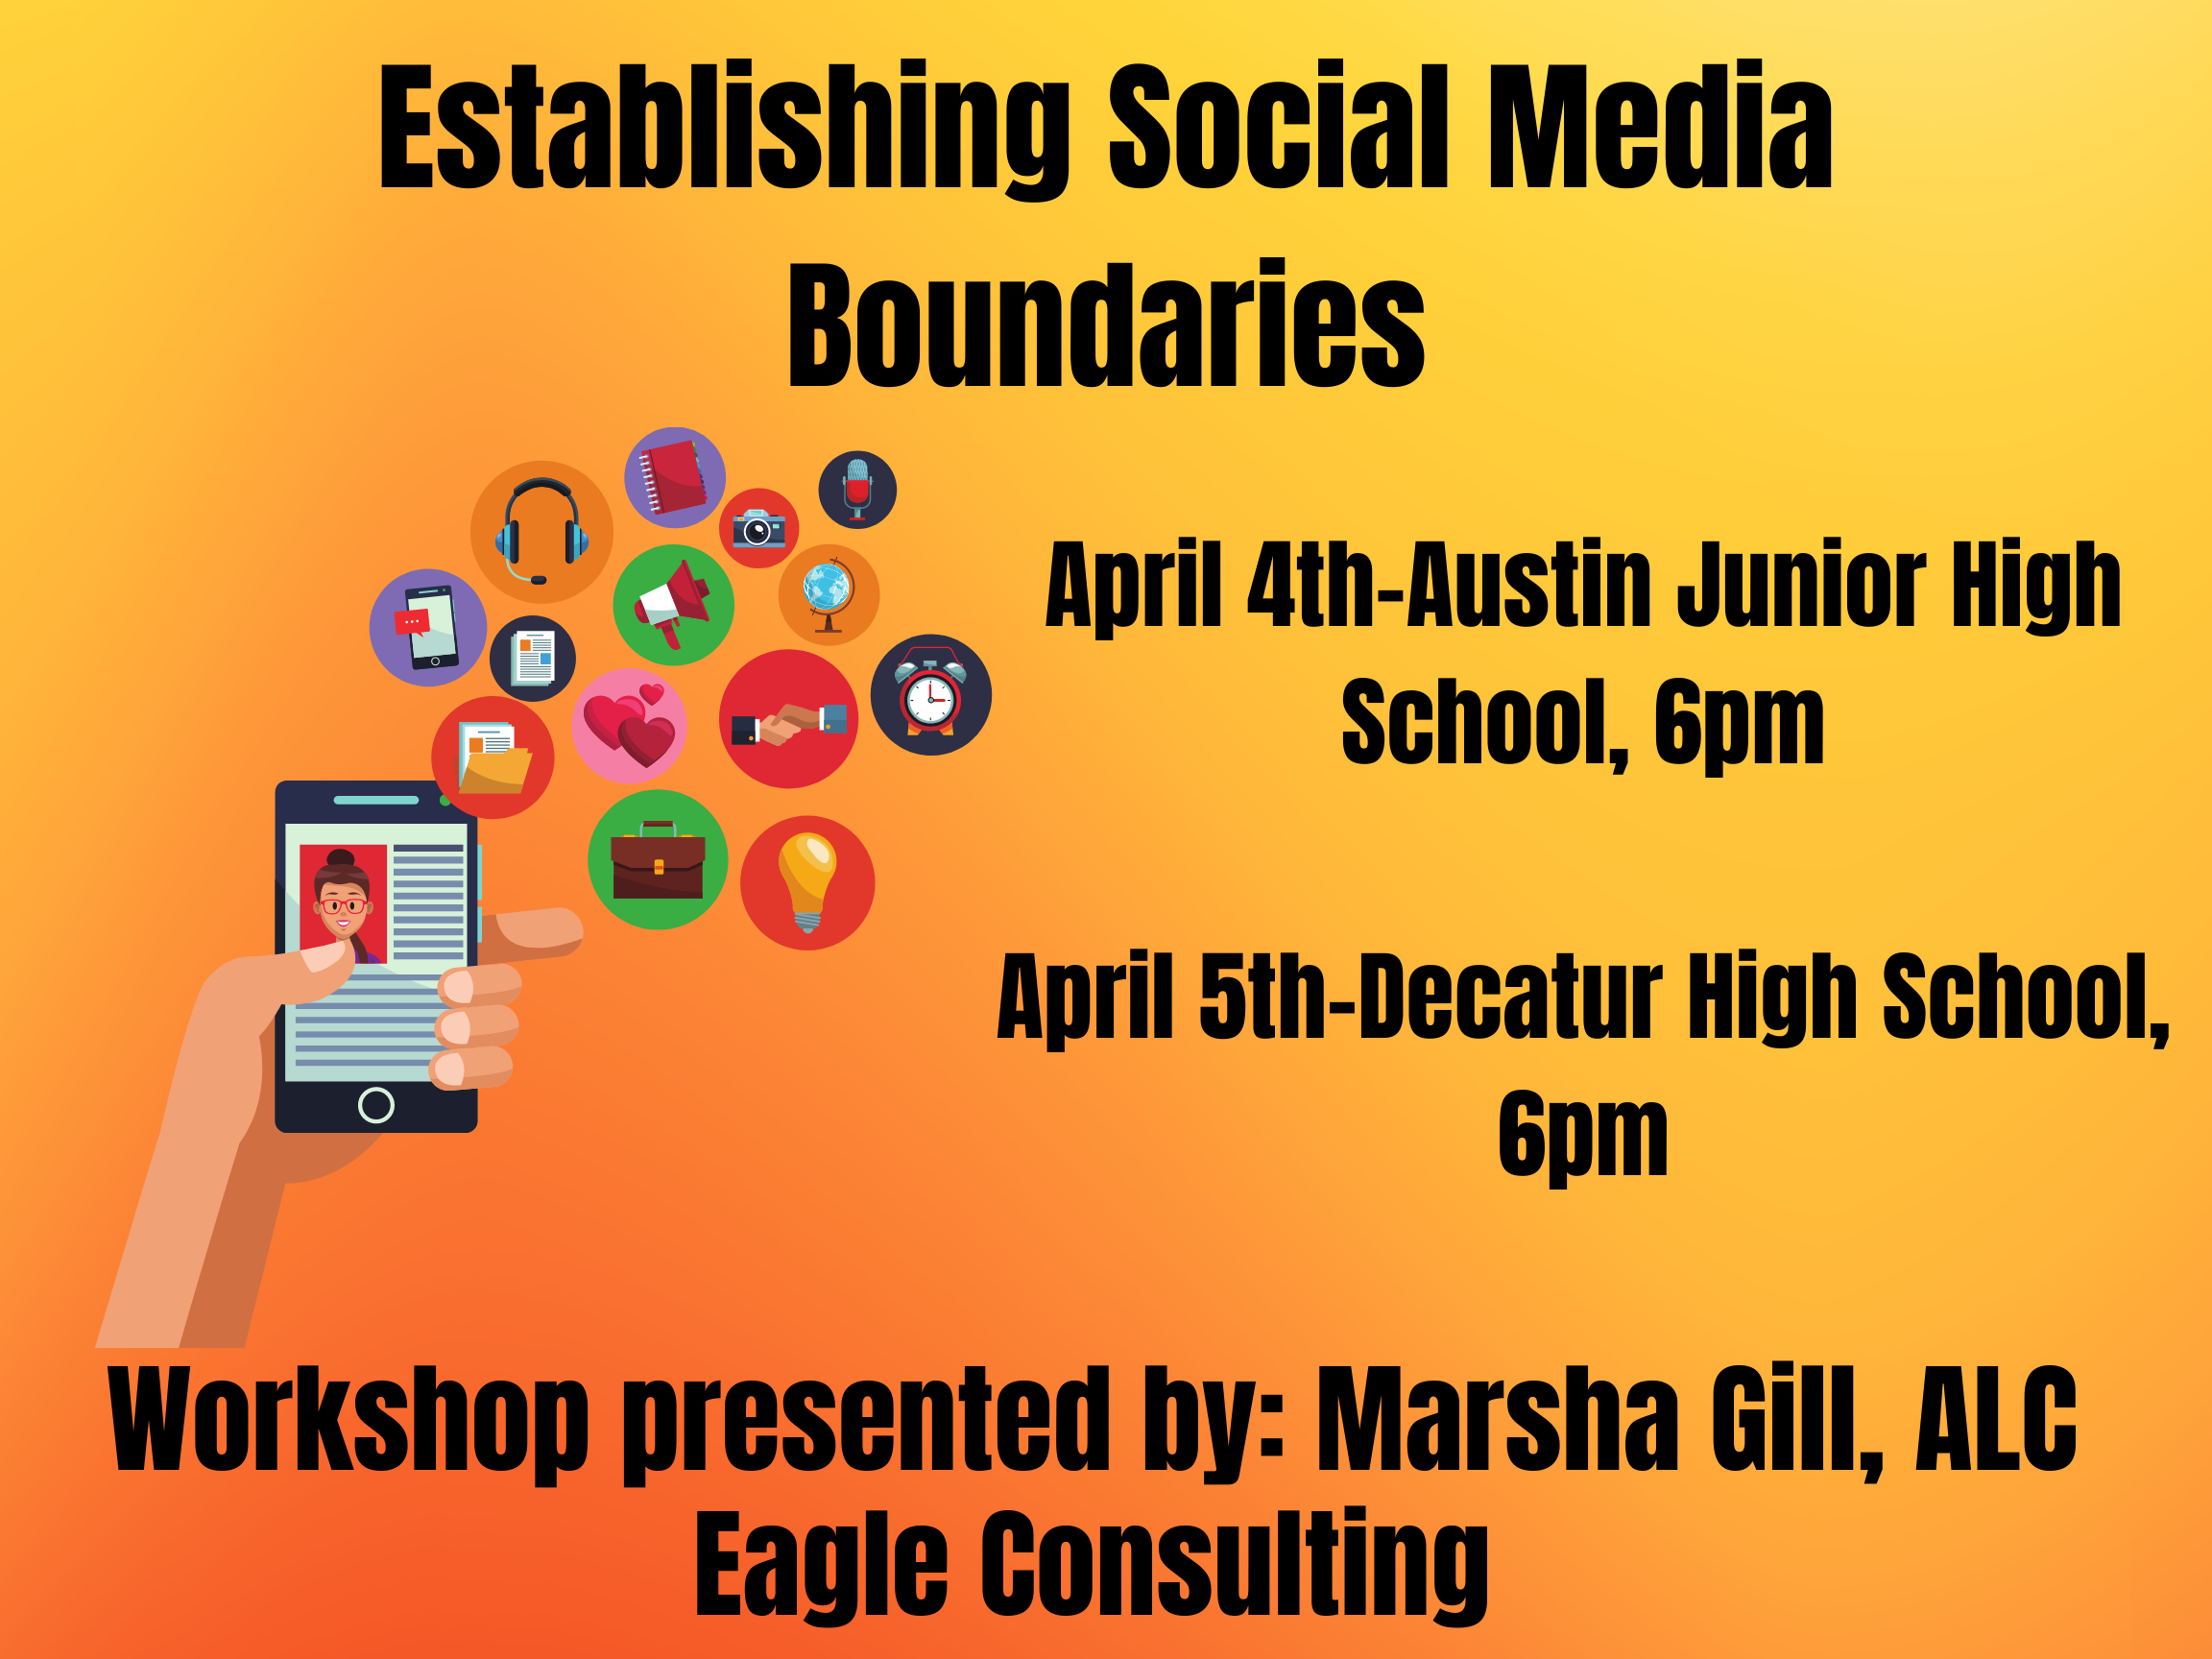 Establishing Social Media Boundaries Flyer. April 4th - Austin Junior High School, 6pm. april 5th - Decatur High School, 6pm. Workshop presented by Marsha Gill, ALC Eagle Consulting